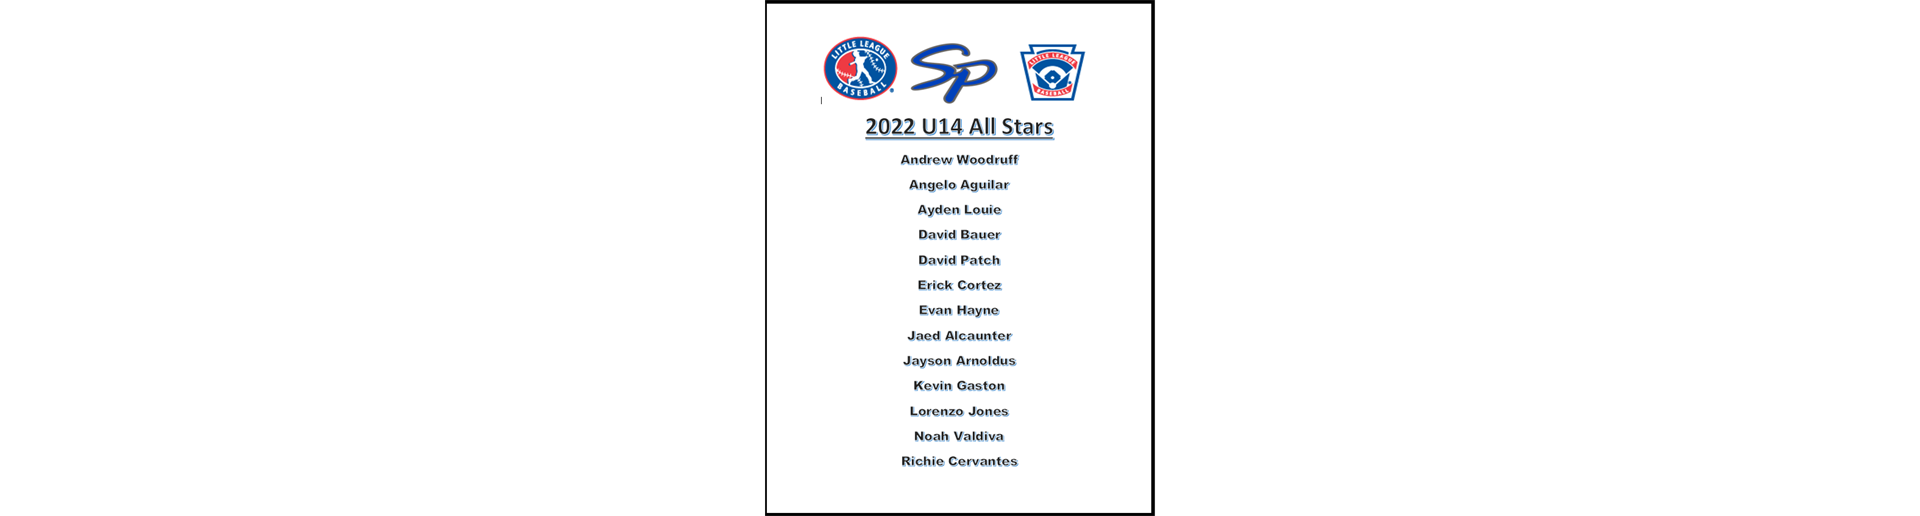 2022 U14 All Star Team